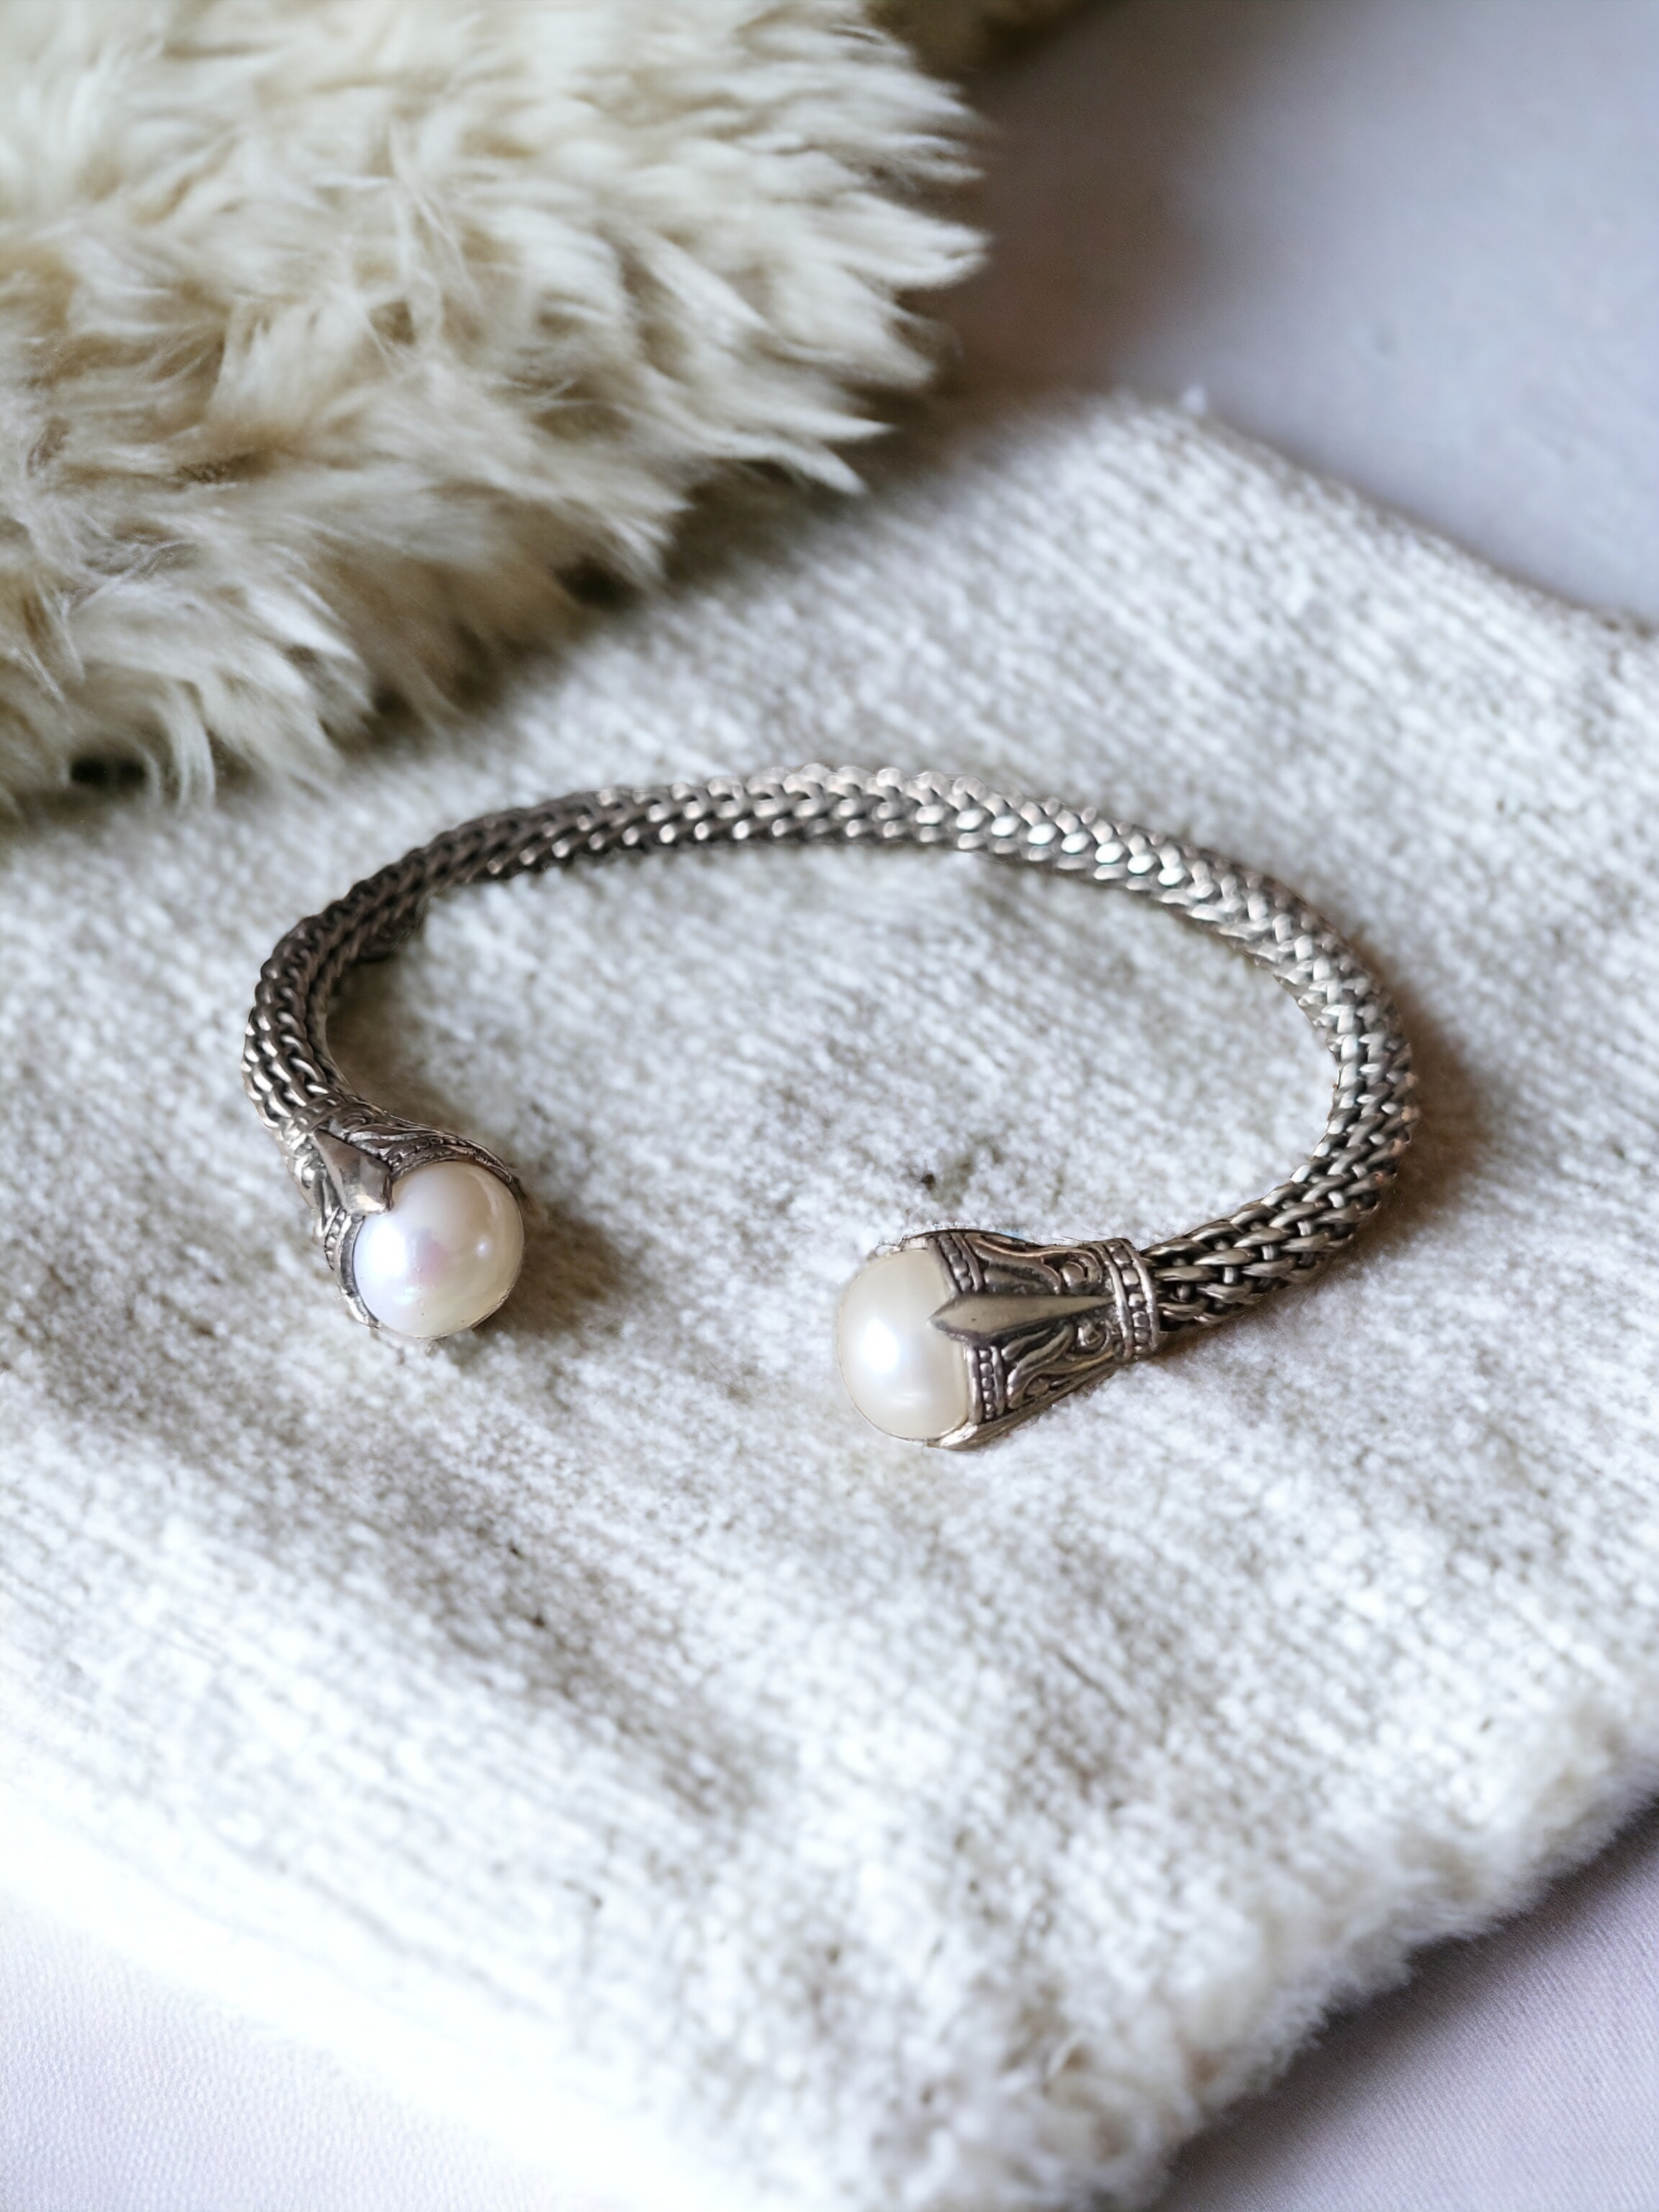 Bali Silver Cuff Bracelet with Pearl Weave Design